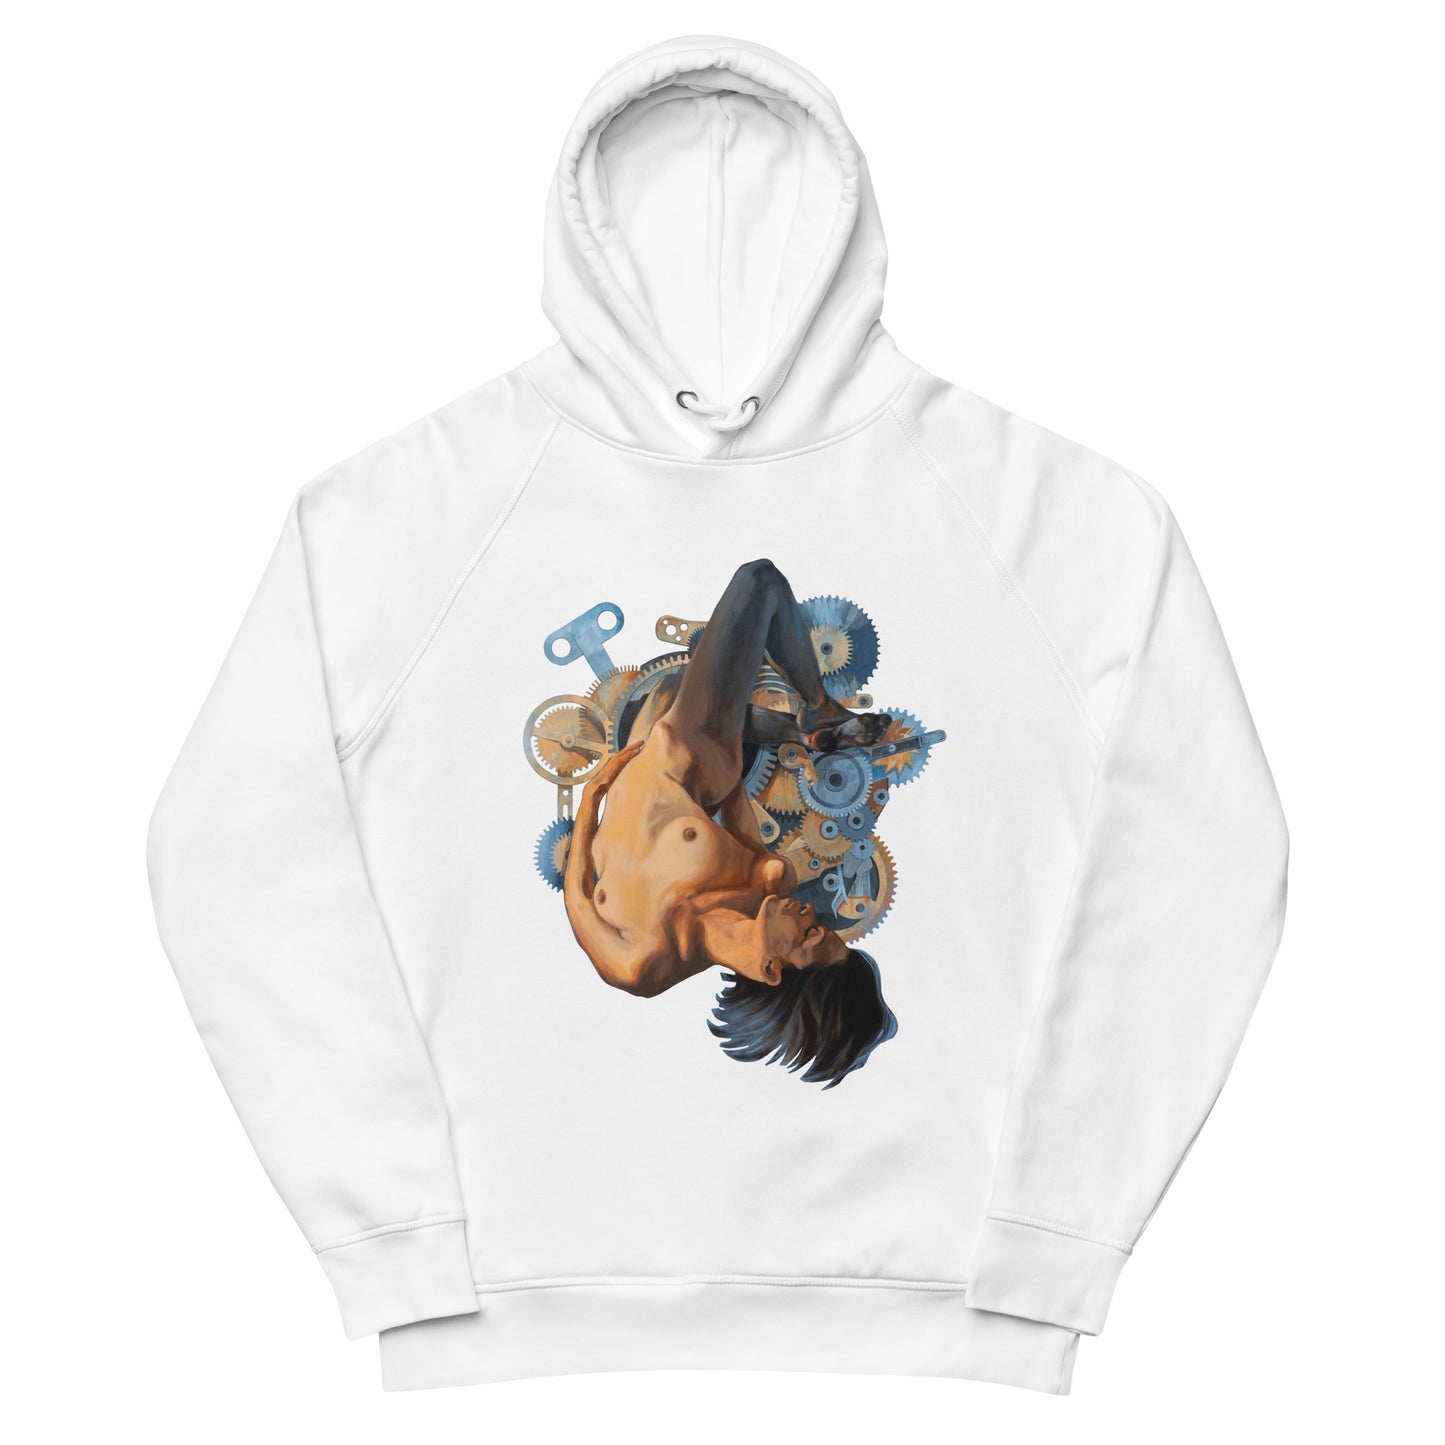 Unisex pullover hoodie - Machine of being